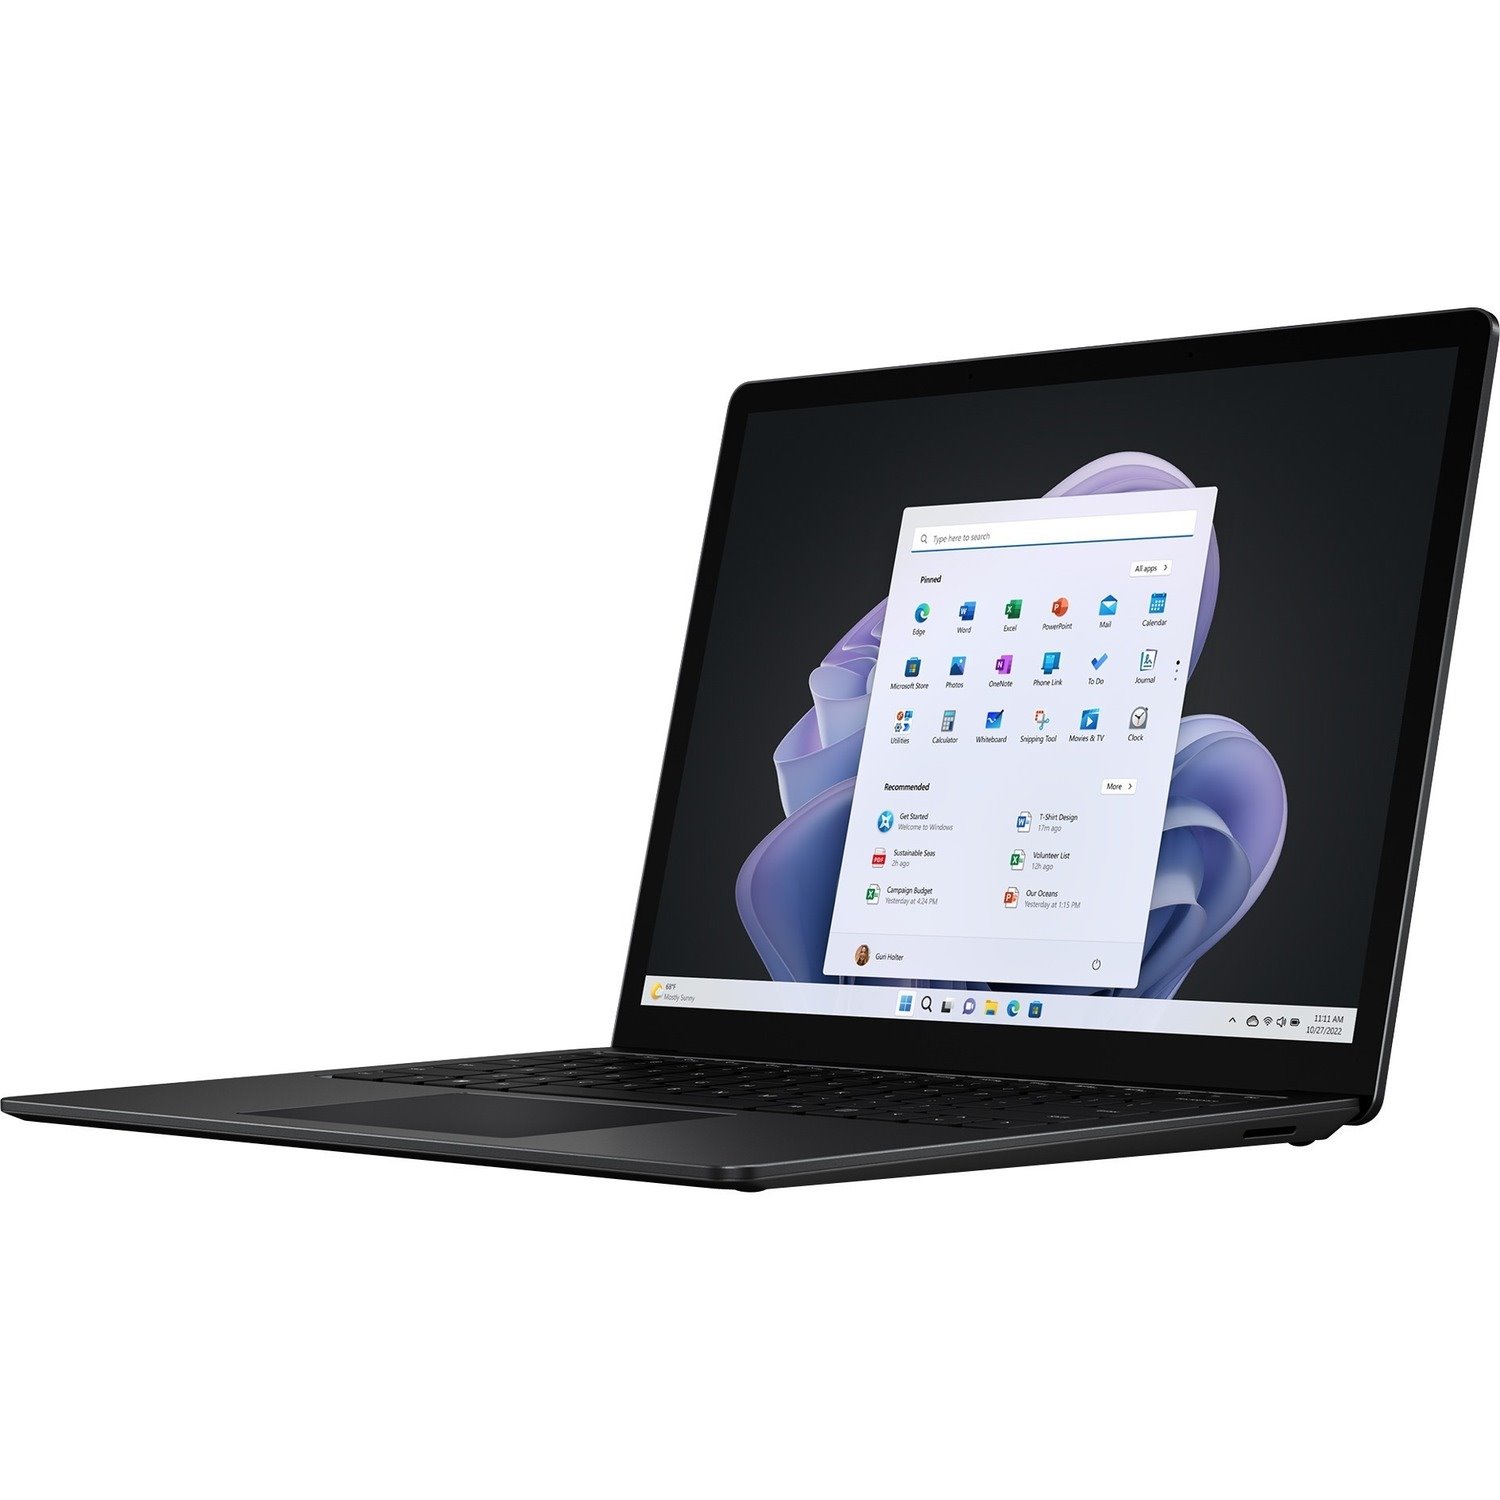 Microsoft Surface Laptop 5 38.1 cm (15") Touchscreen Notebook - 2496 x 1664 - Intel Core i7 12th Gen - Intel Evo Platform - 16 GB Total RAM - 256 GB SSD - Matte Black